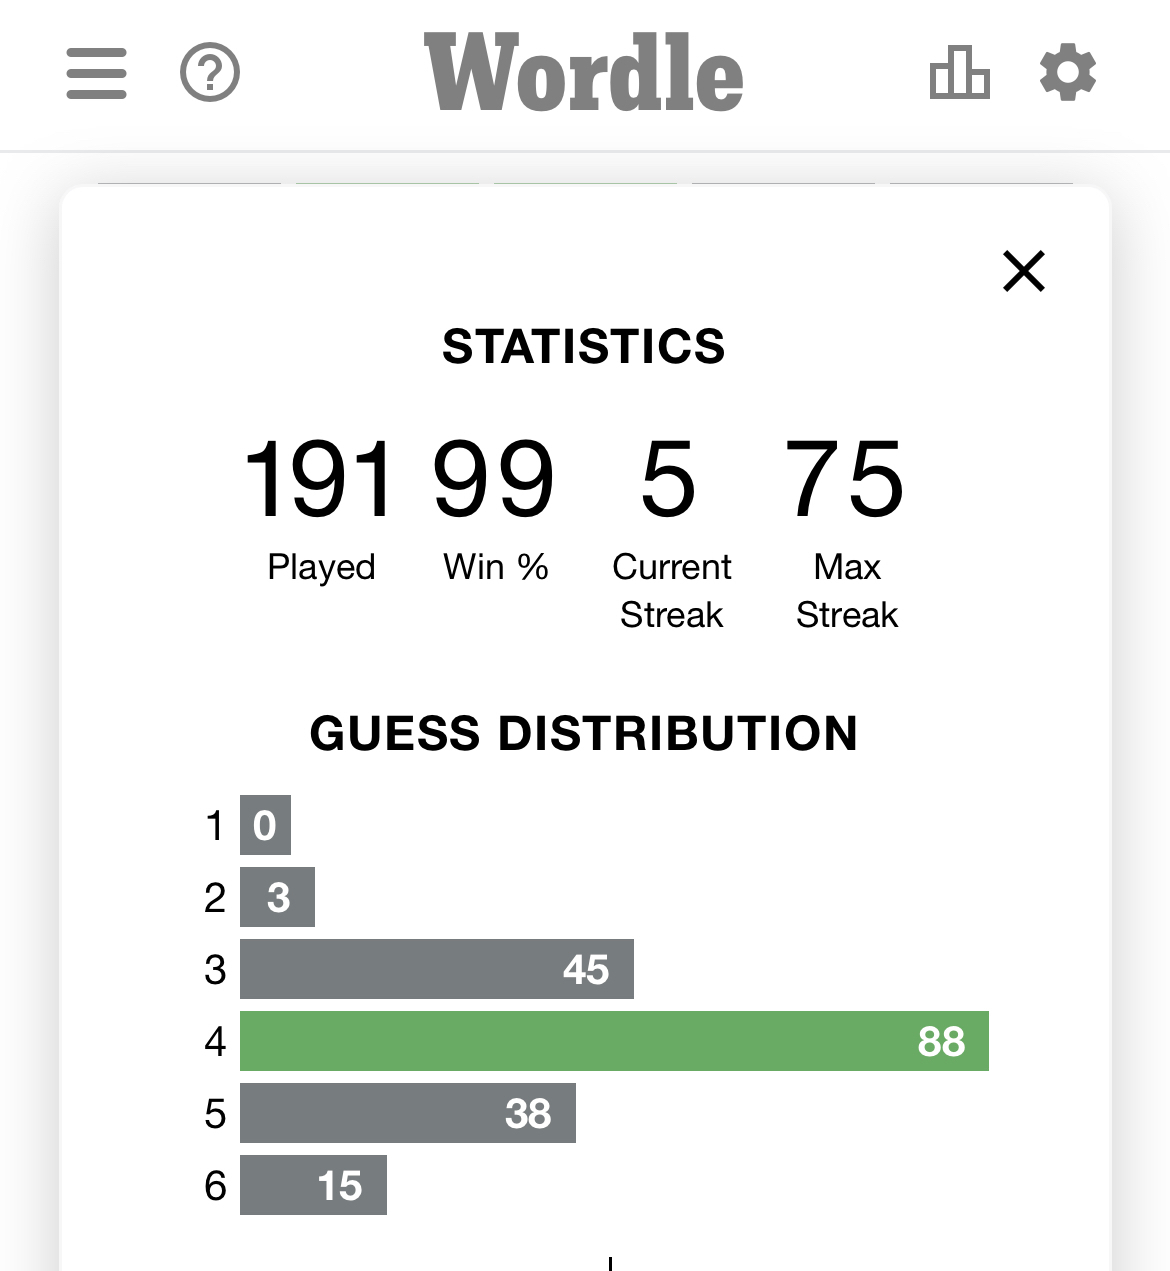 Screenshot showing Wordle word game stats. Played, 191. Win %, 99. Current Streak, 5. Max Streak, 75